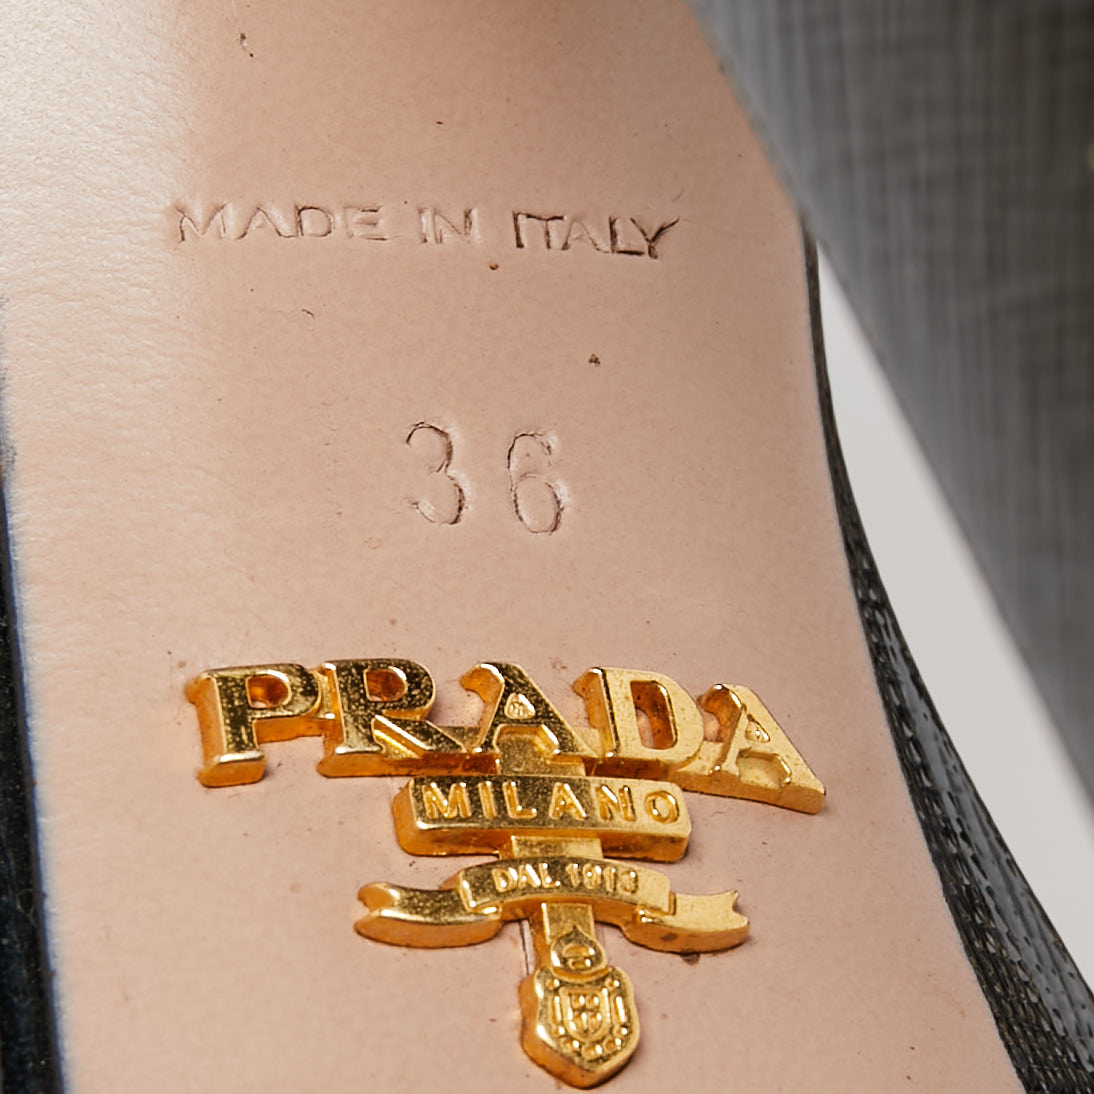 Prada Black Vernice Saffiano Leather Platform Ankle Strap Sandals Size 36